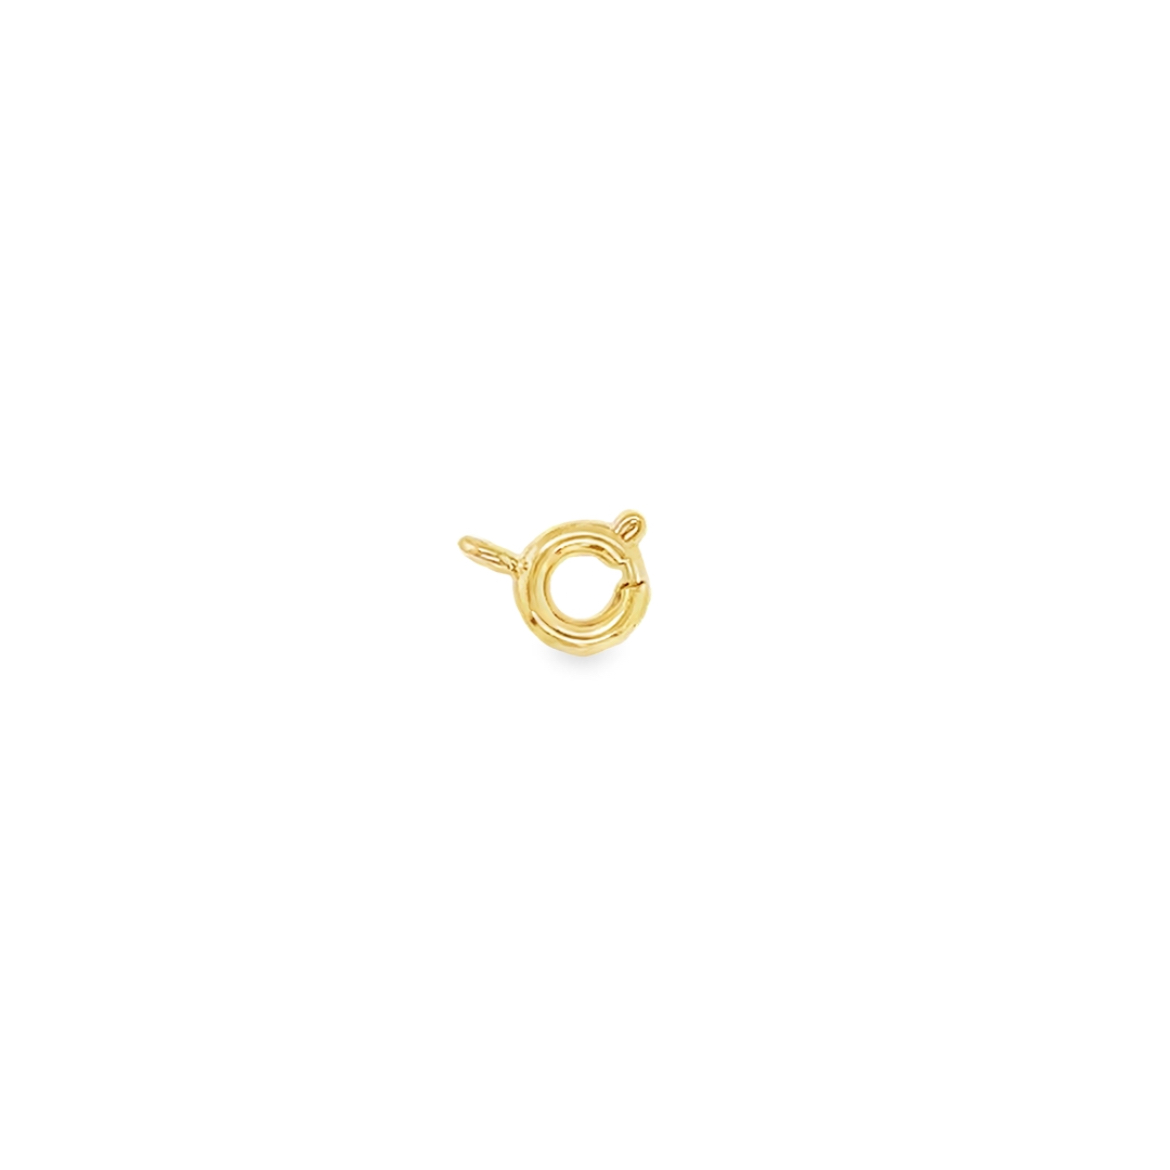 5.5mm Gold Filled Spring Ring